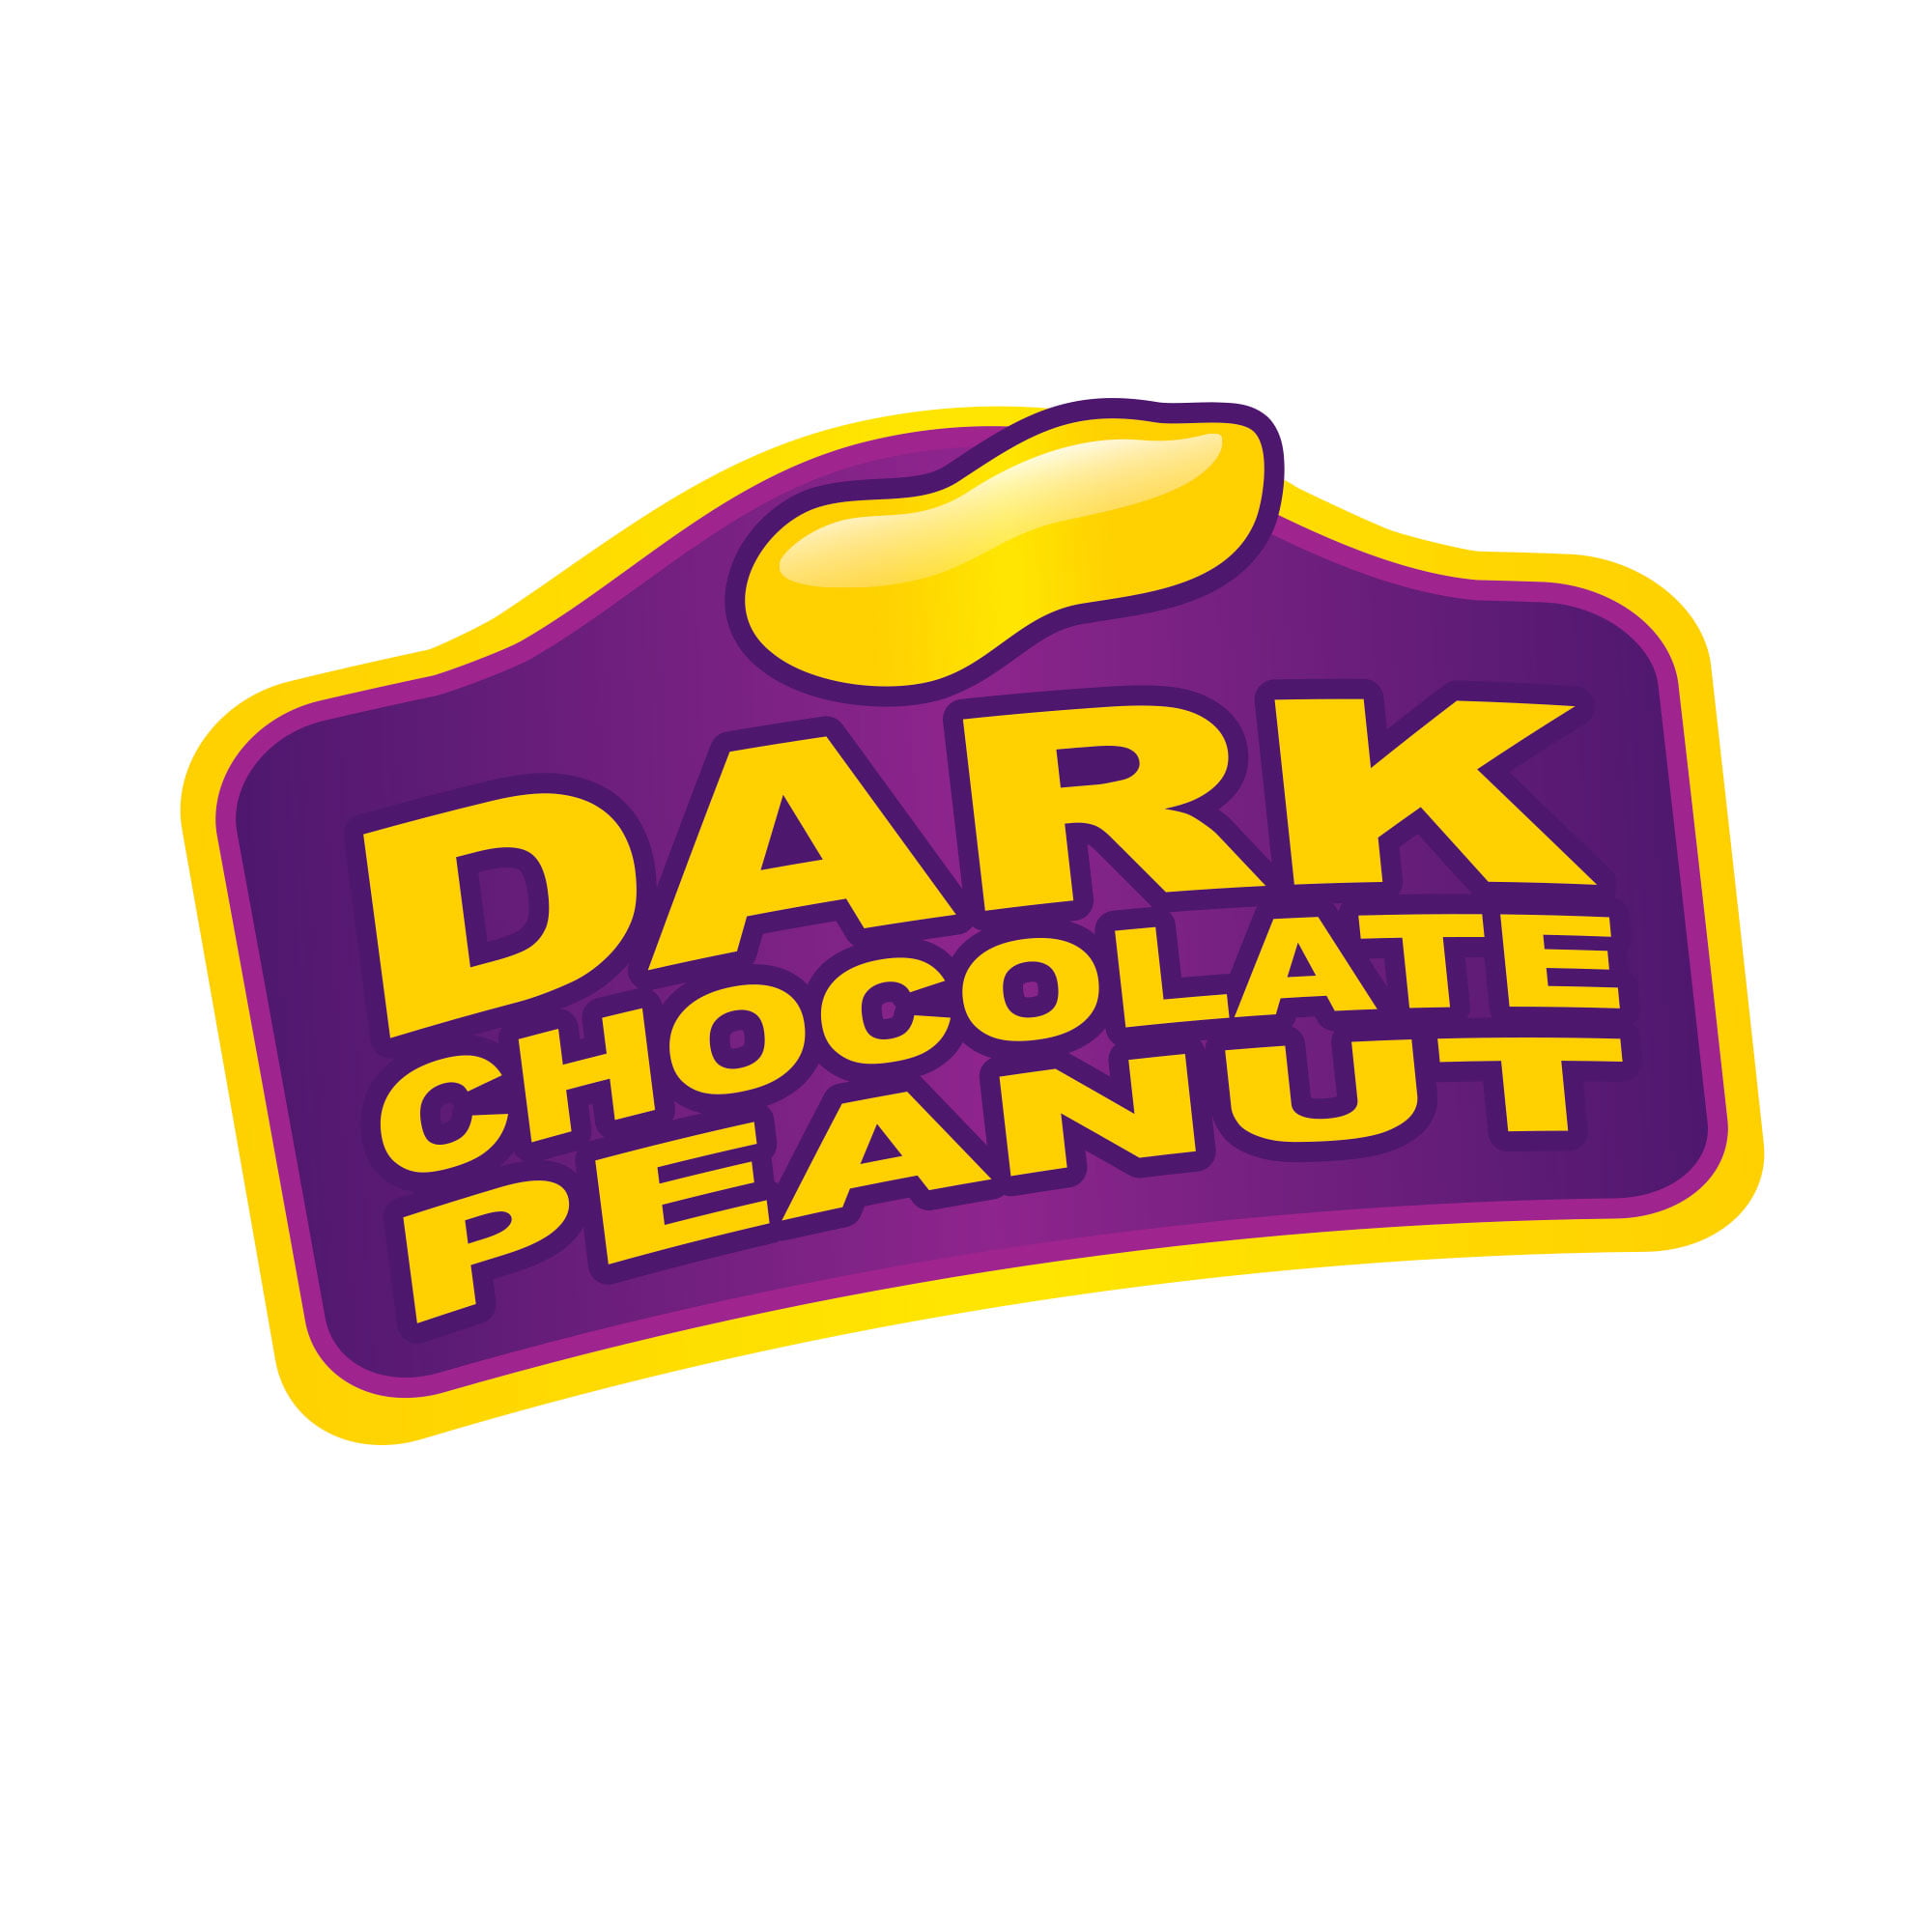 m&m dark chocolate and m&m dark chocolate with peanuts – Best recipes,  foods and travel